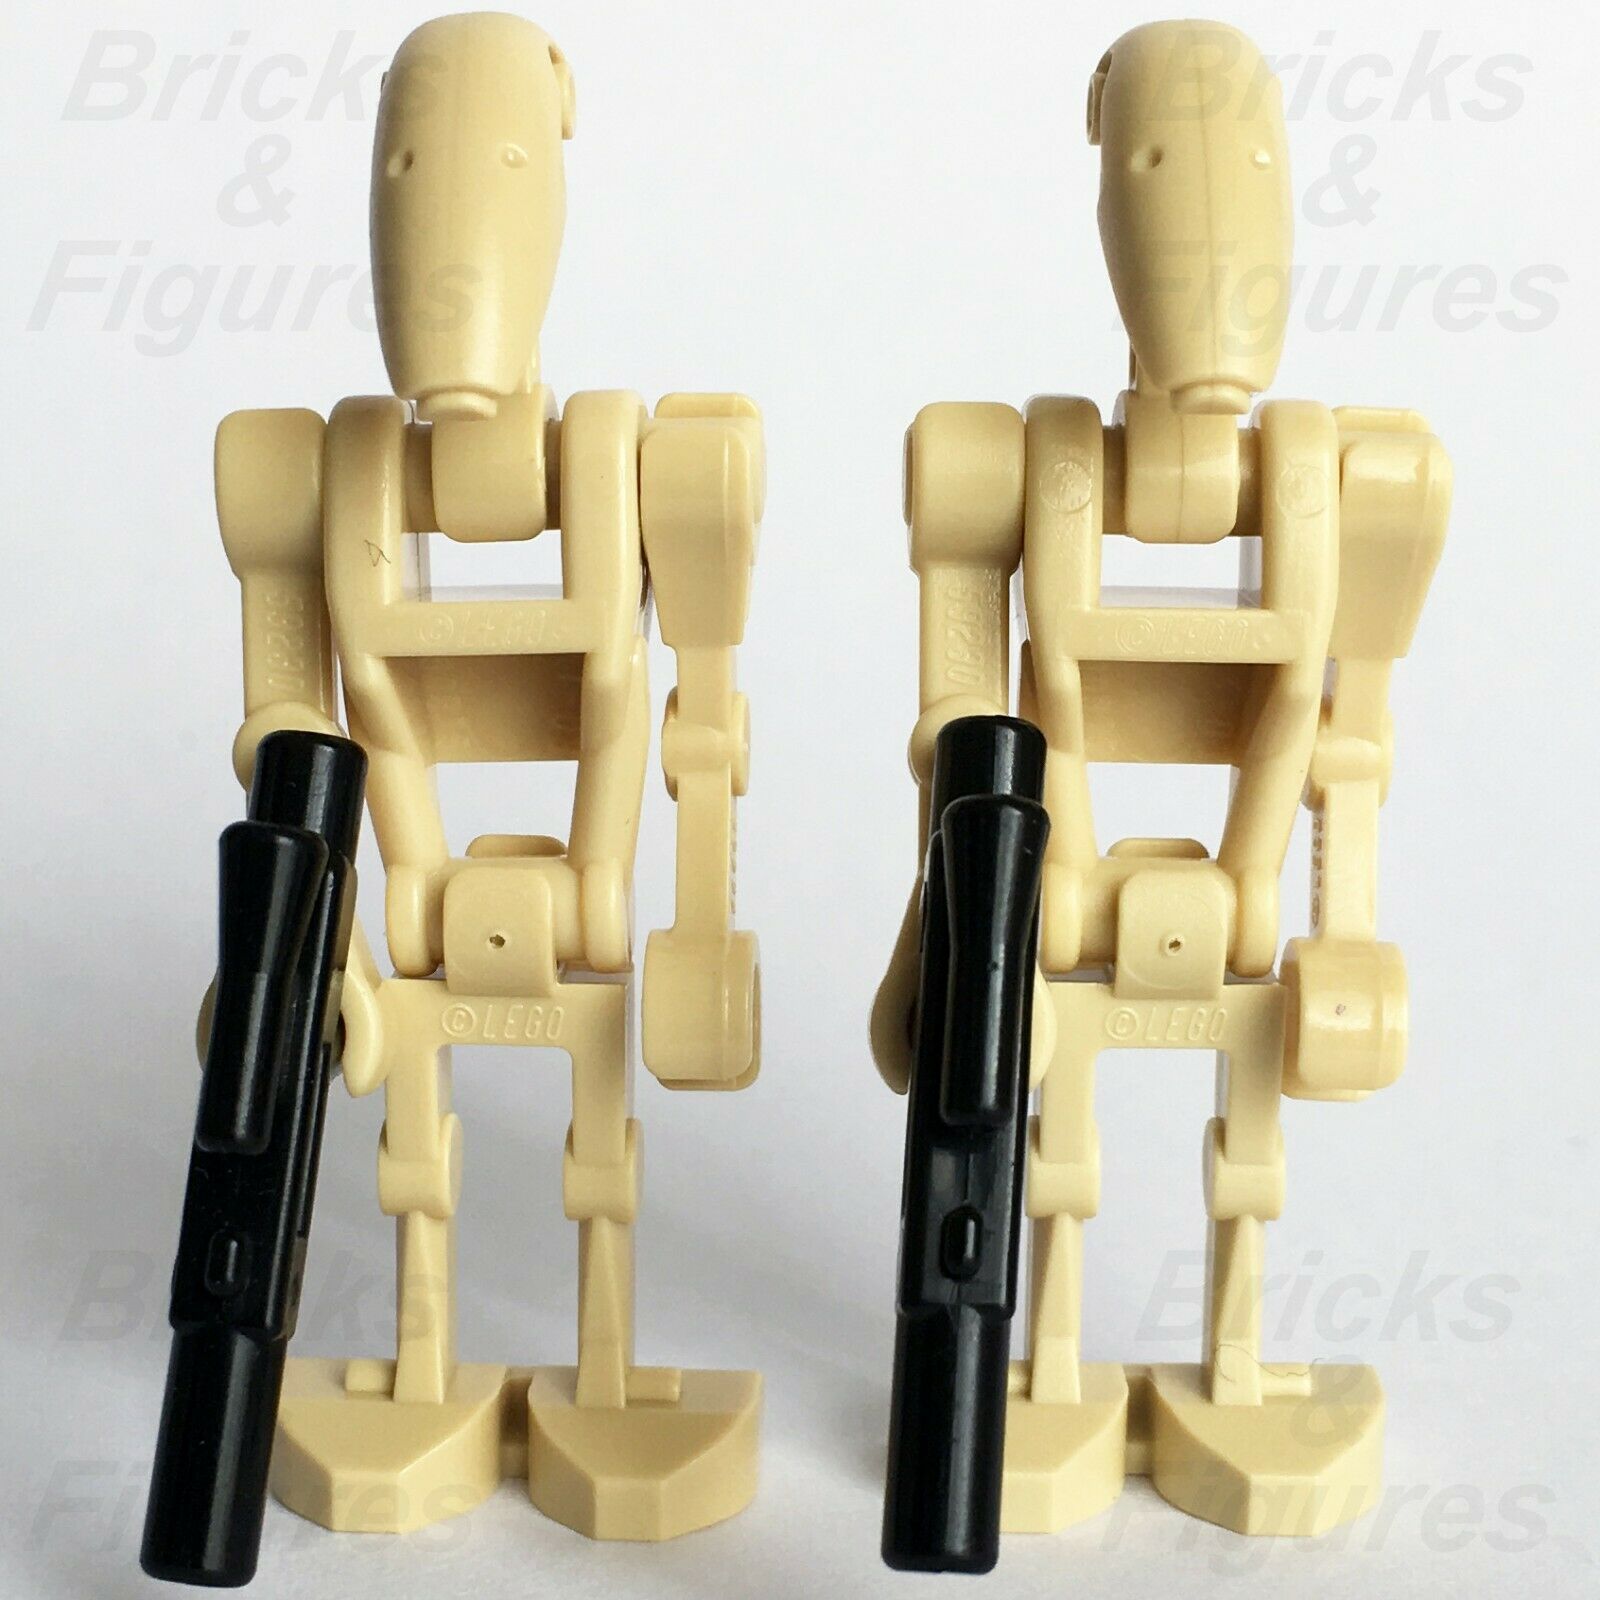 Star Wars LEGO 2 x Battle Droid Minifigures 75043 75058 7662 7929 7670 - Bricks & Figures